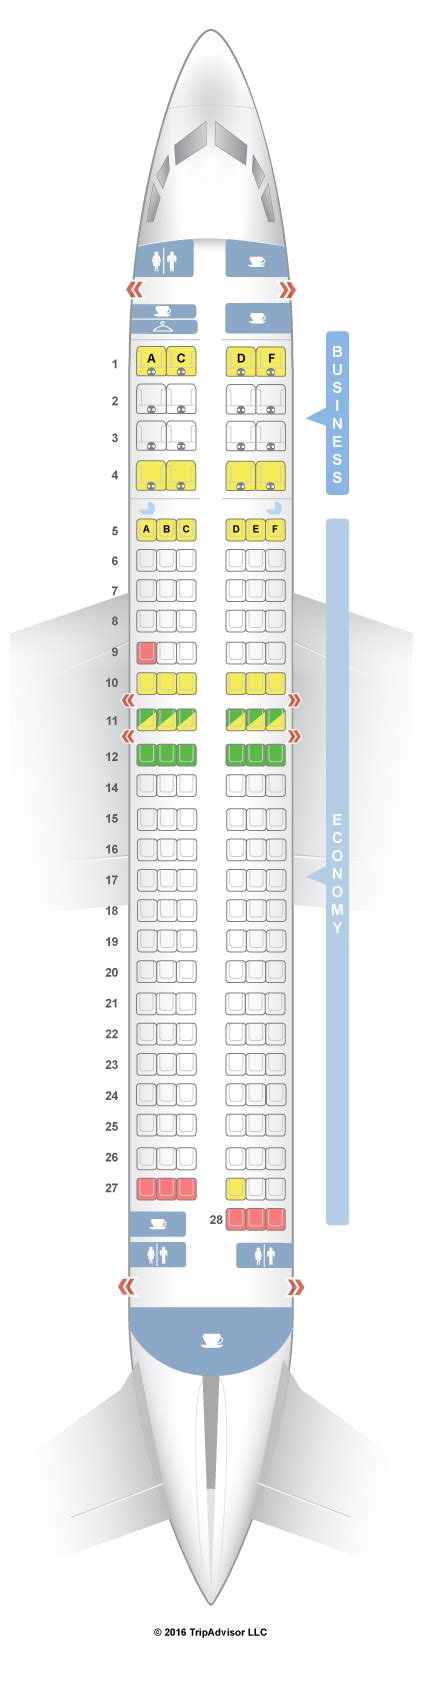 Seatguru Seat Map Turkish Airlines Boeing Er V Free